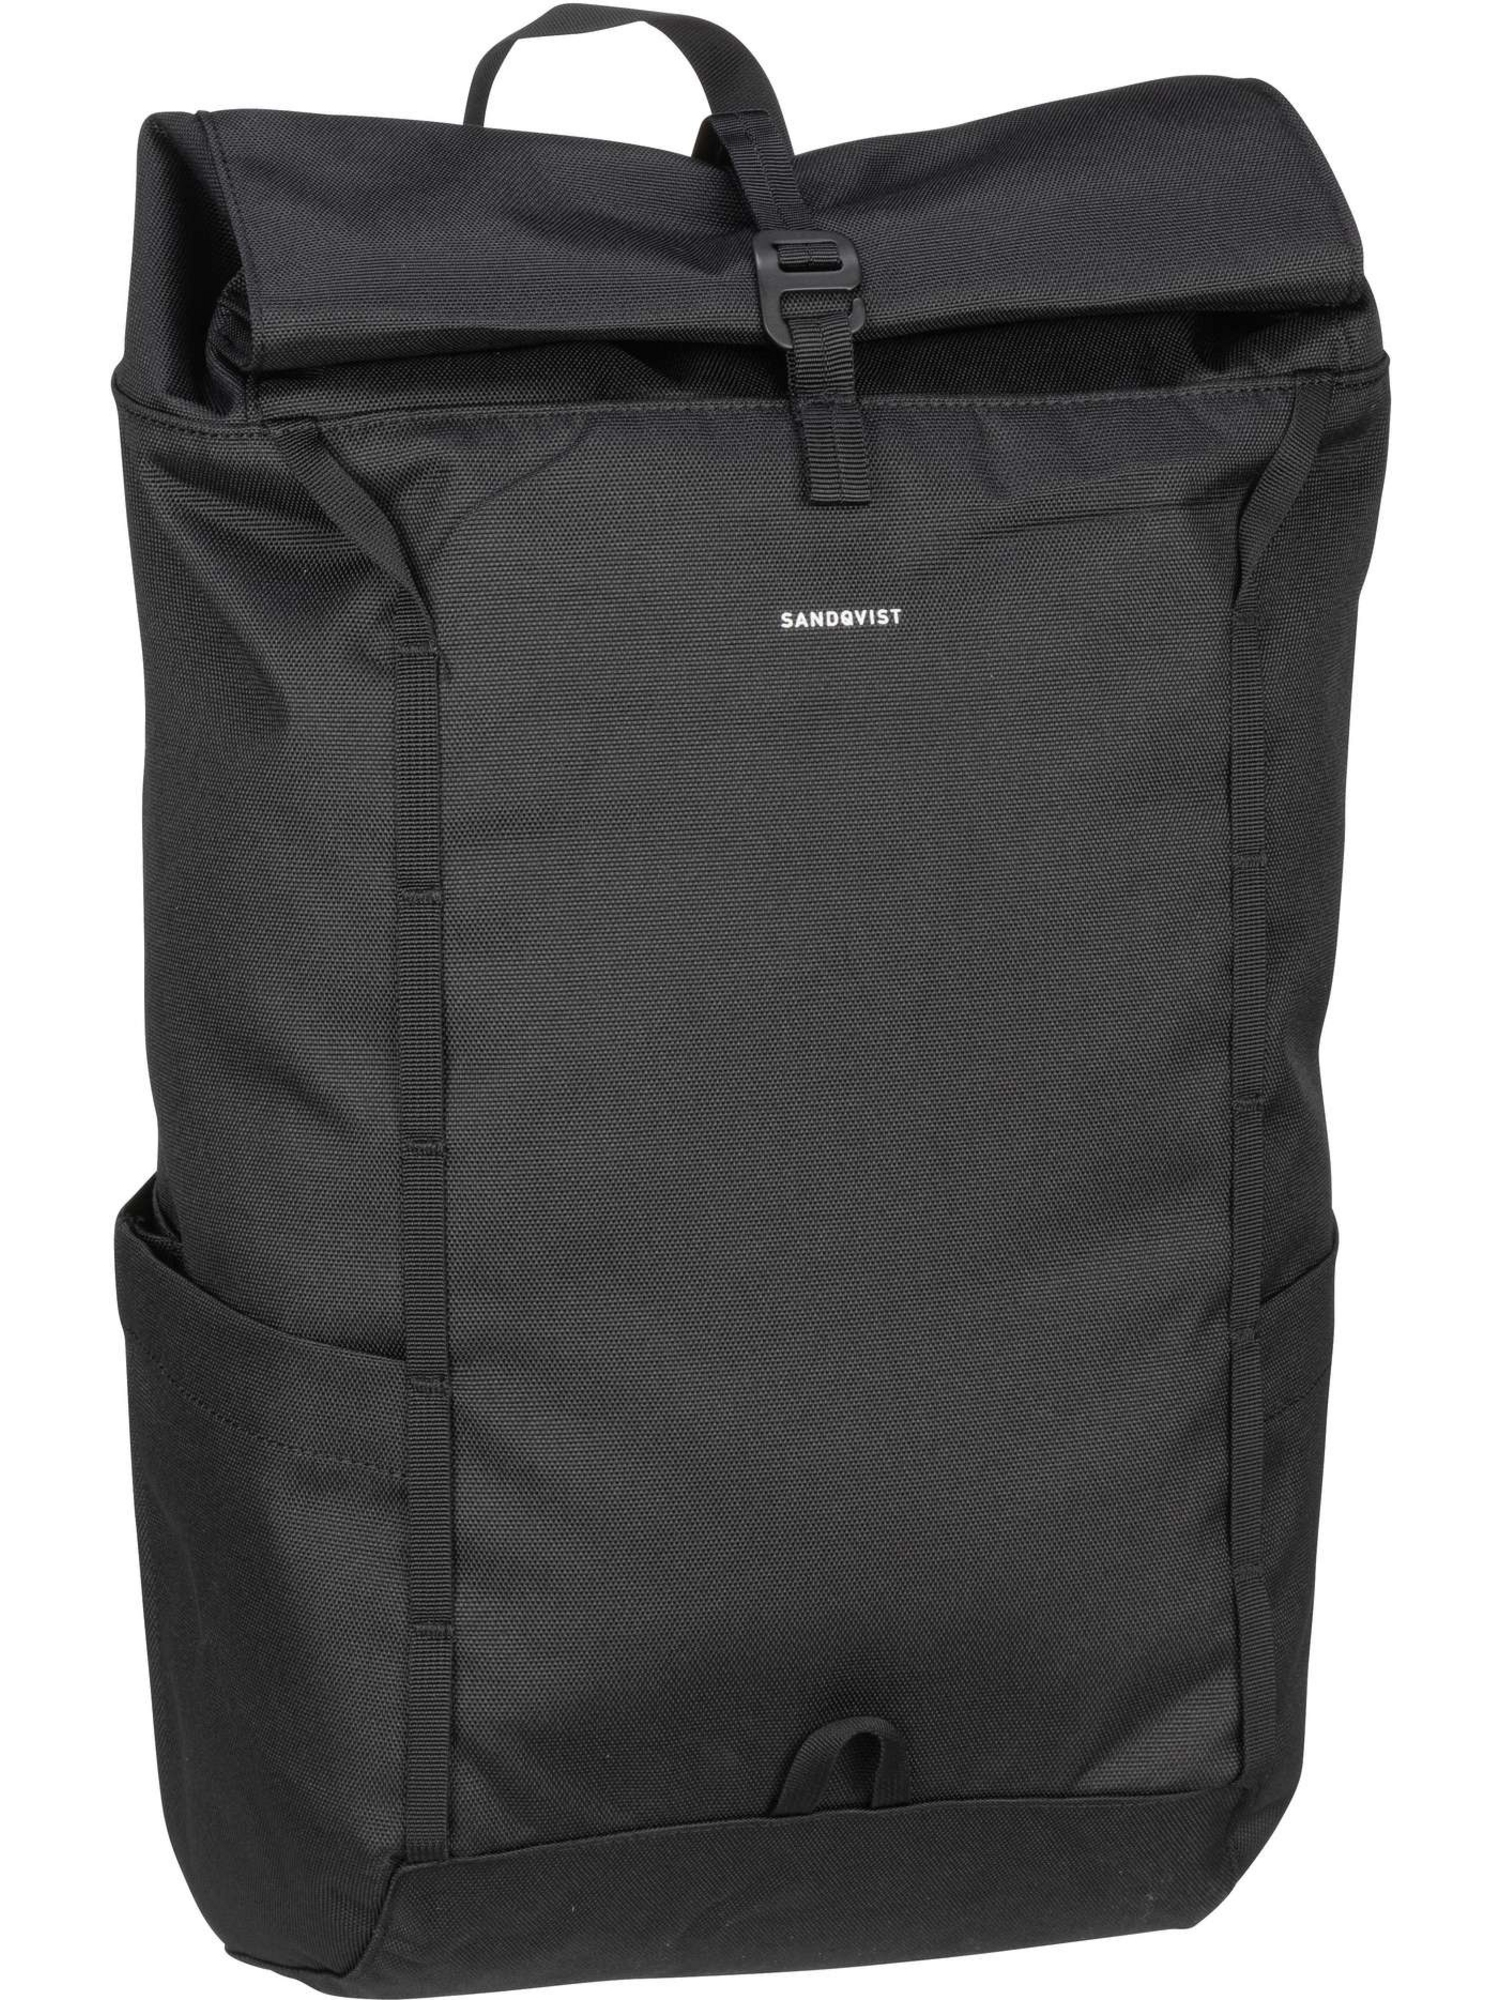 Рюкзак SANDQVIST Rolltop Arvid Rolltop Backpack, черный рюкзак sandqvist backpack ilon rolltop backpack темно синий